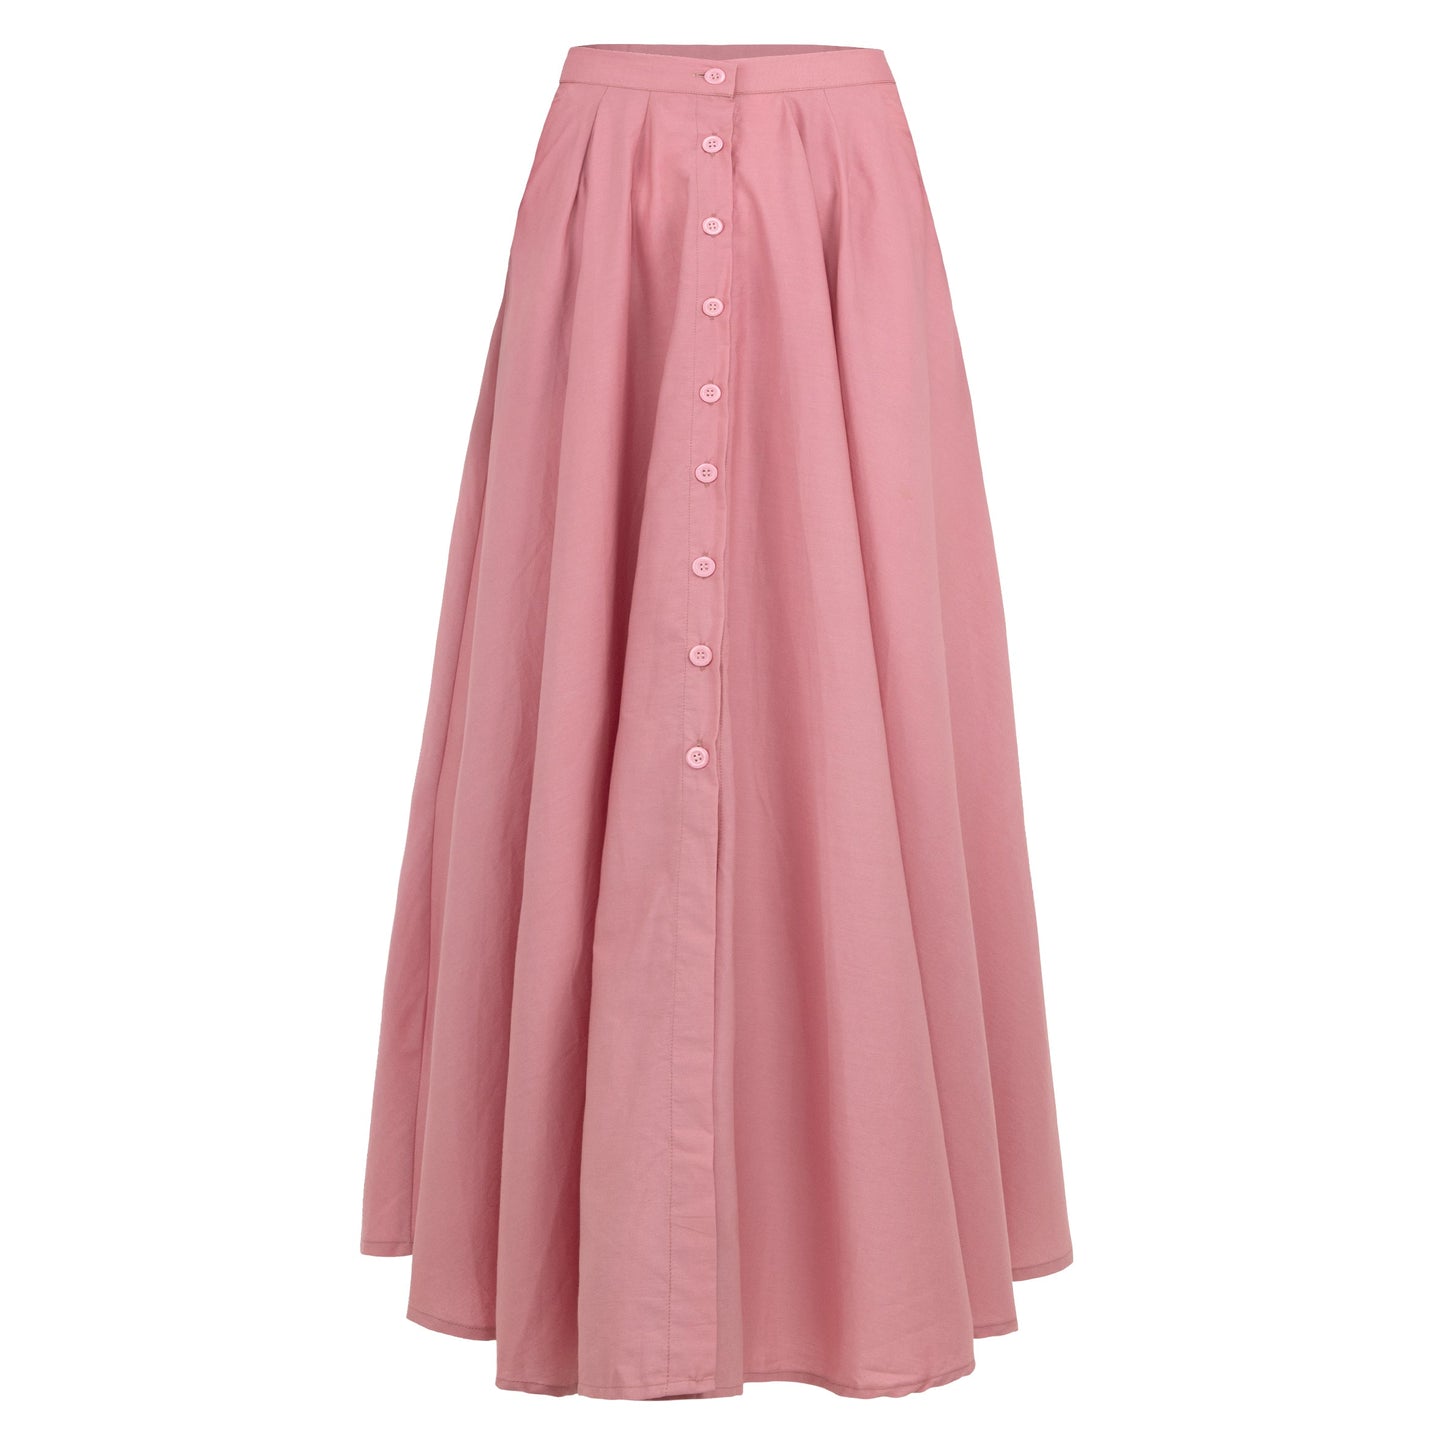 Arum Pleated Maxi Skirt in Blush